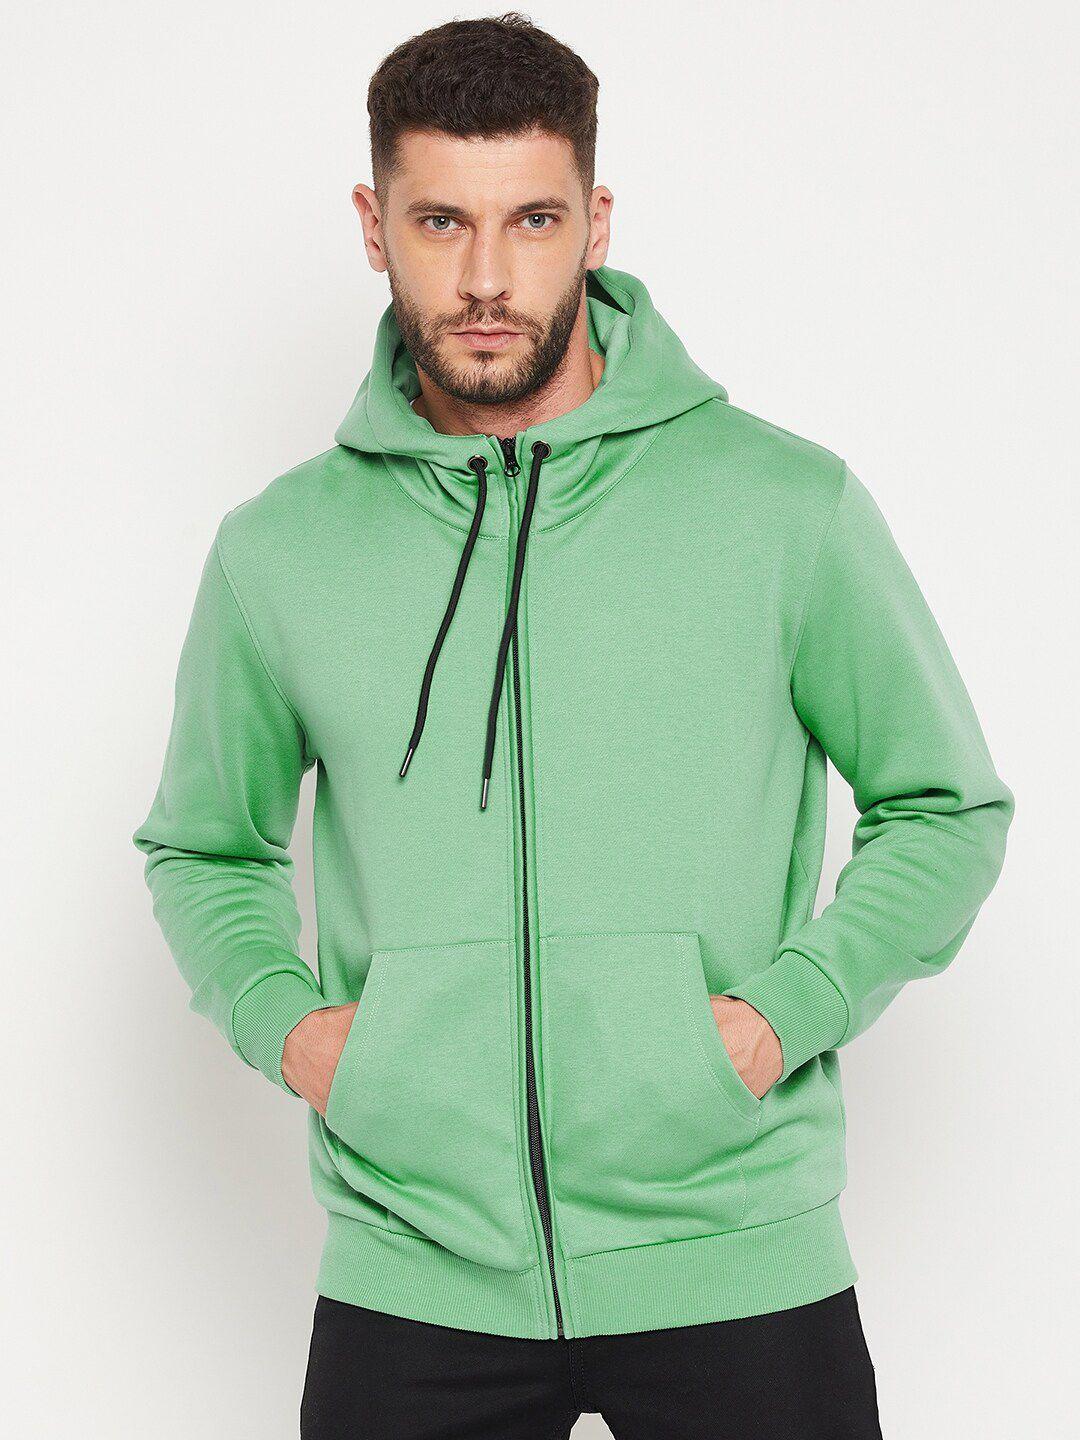 edrio men green hooded fleece sweatshirt